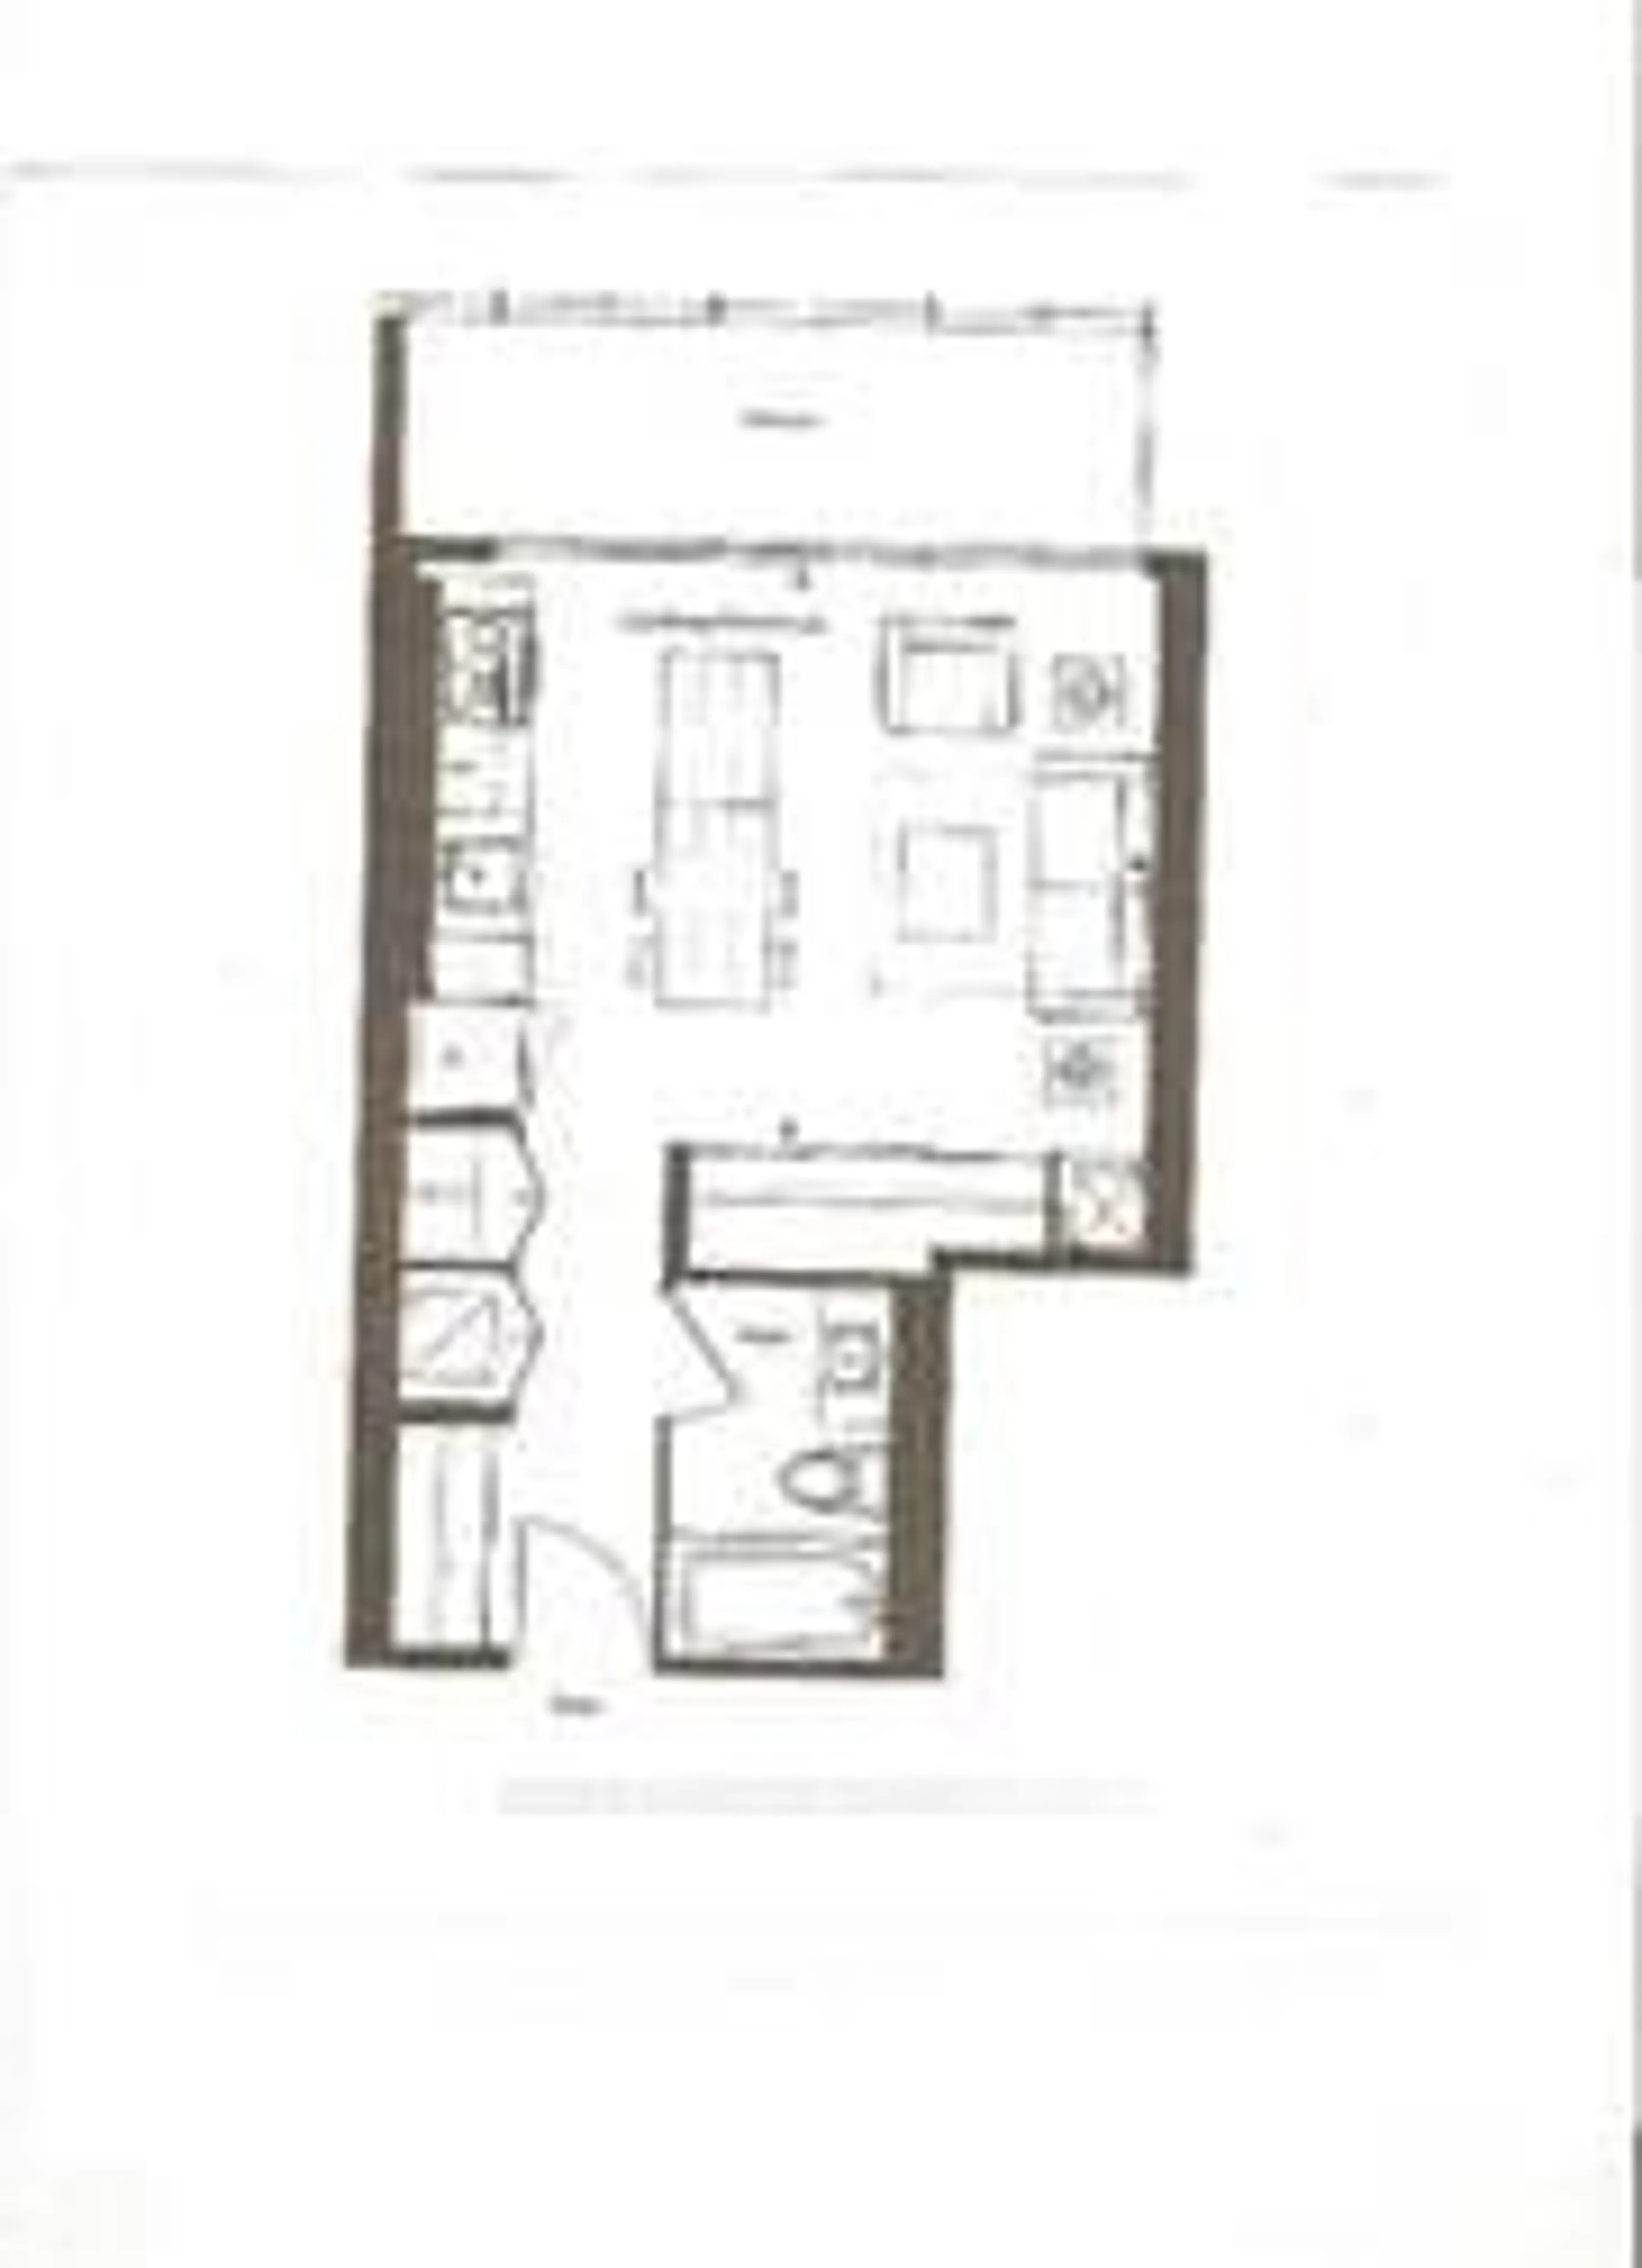 Floor plan for 101 Charles St #3607, Toronto Ontario M4Y 1V2